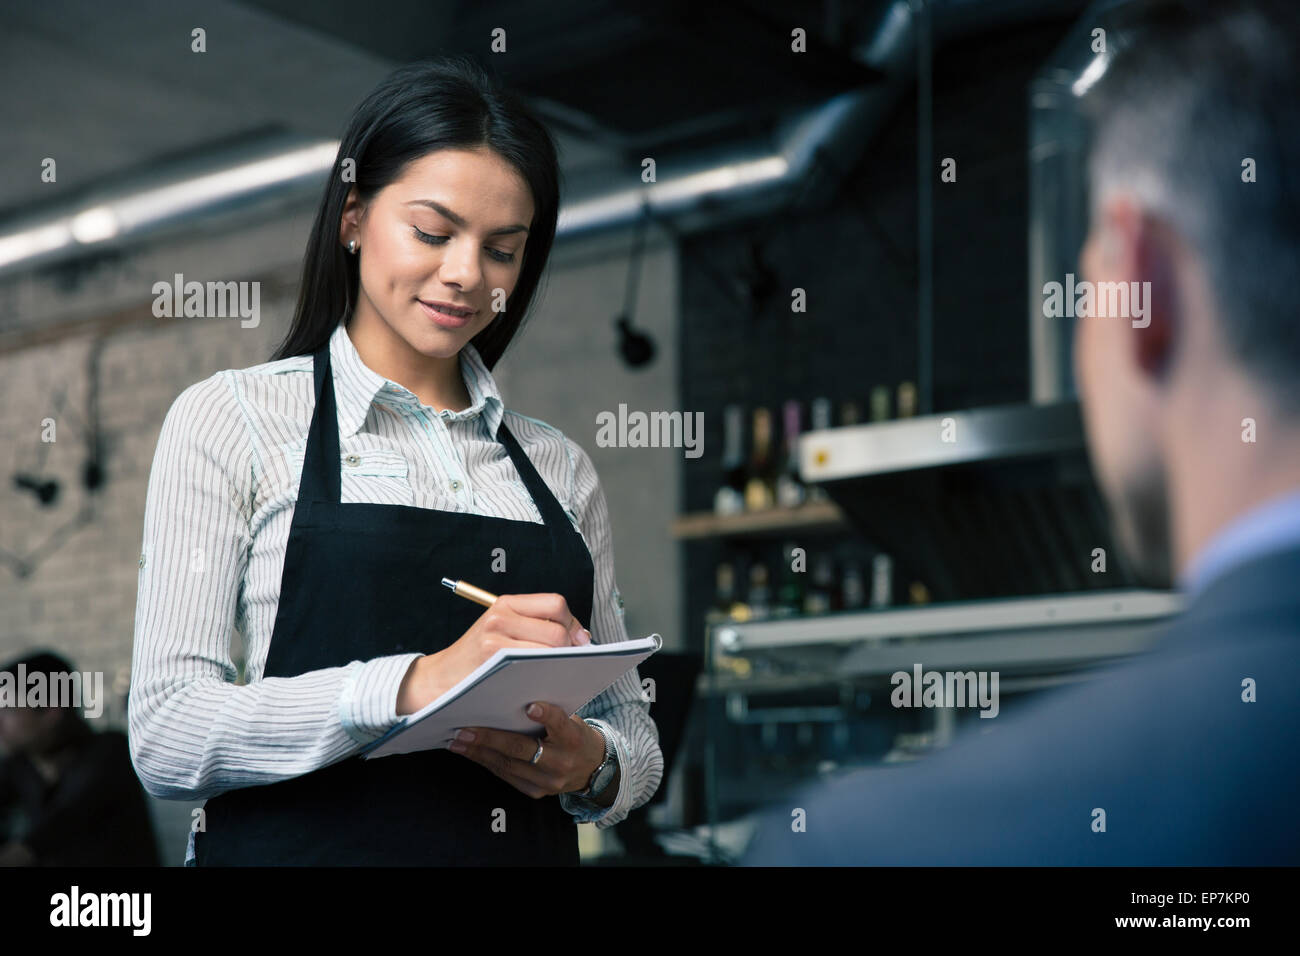 Female waiter in apron writing order in restaurant Stock Photo